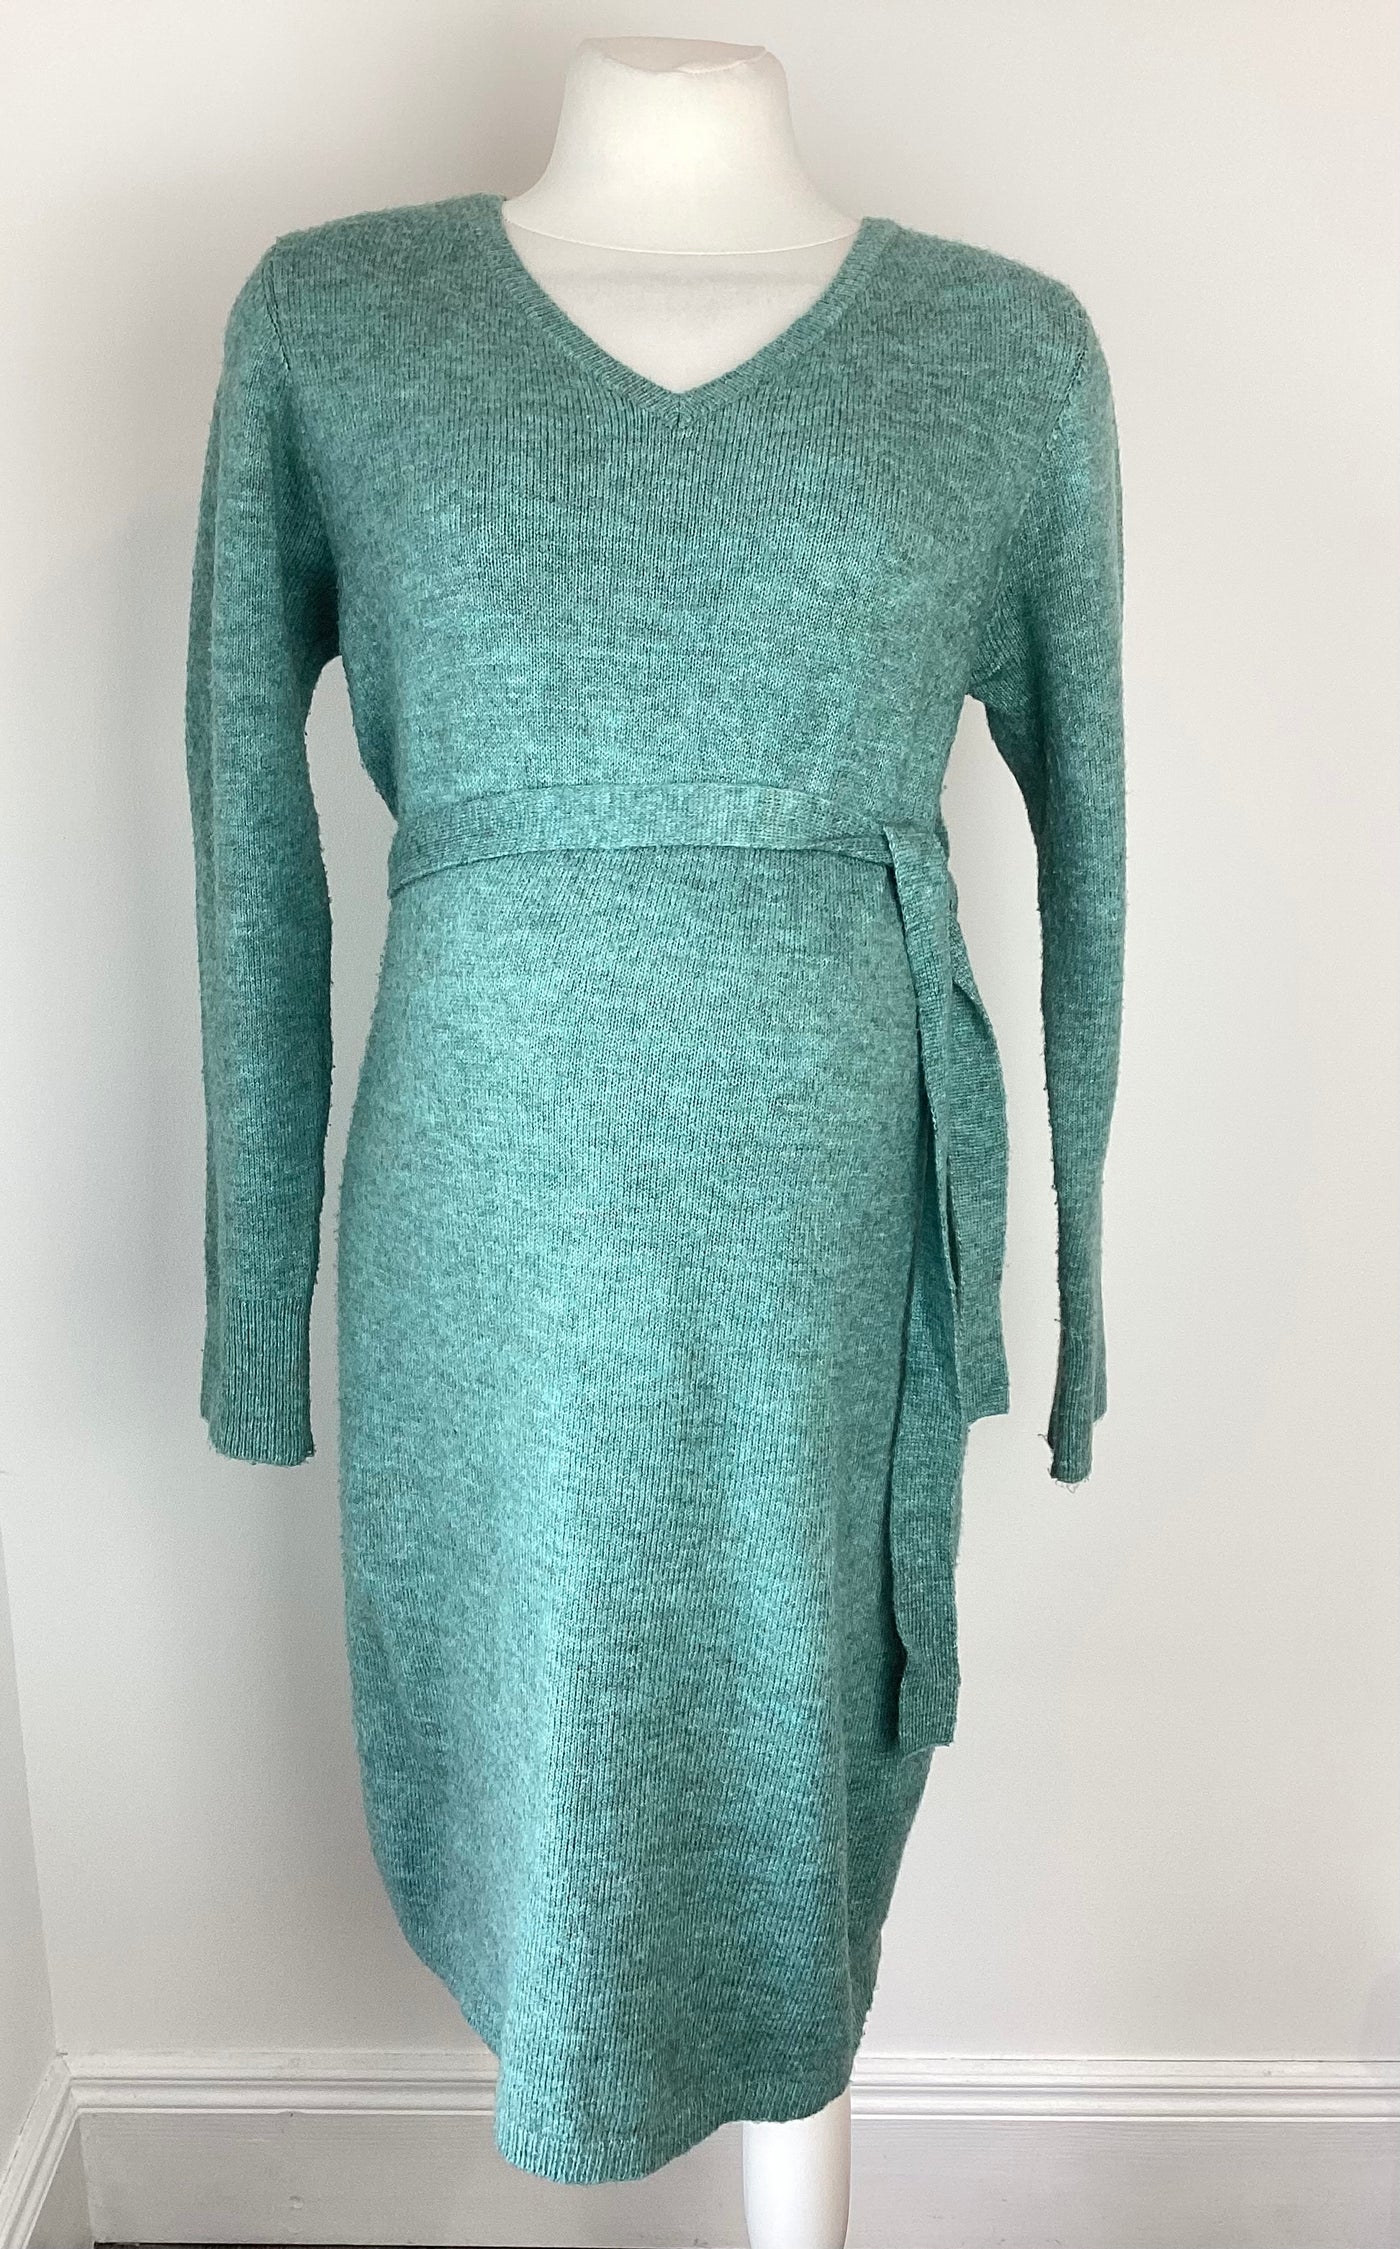 Jojo Maman Bebe green knit dress with waist tie - Size S (Approx UK 8/10)